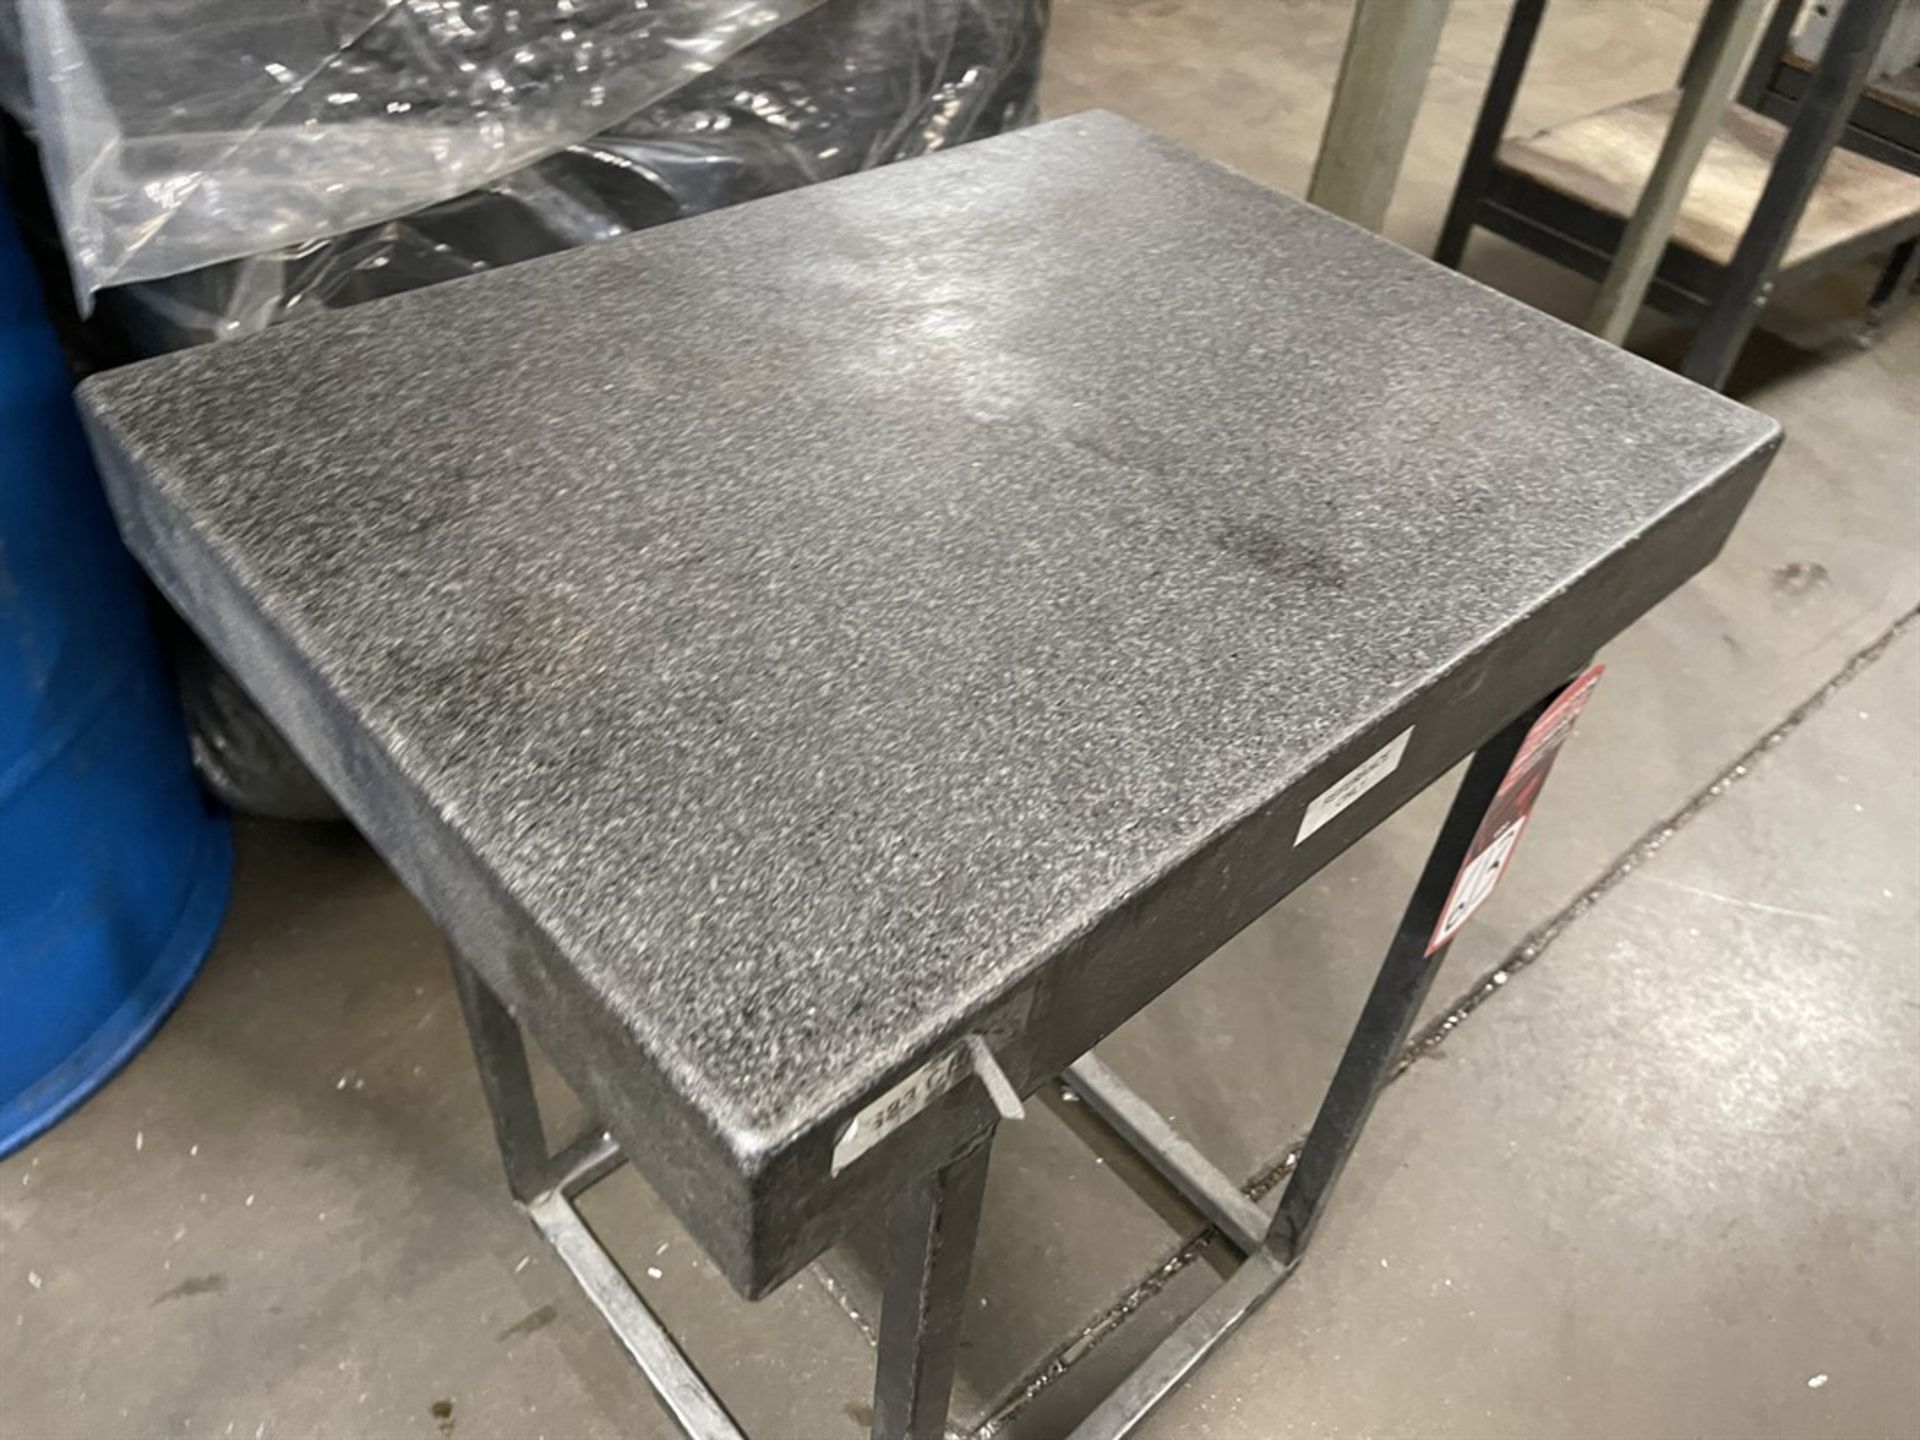 Black Granite Surface Plate, 18" x 24" x 3", on Steel Base - Image 2 of 2